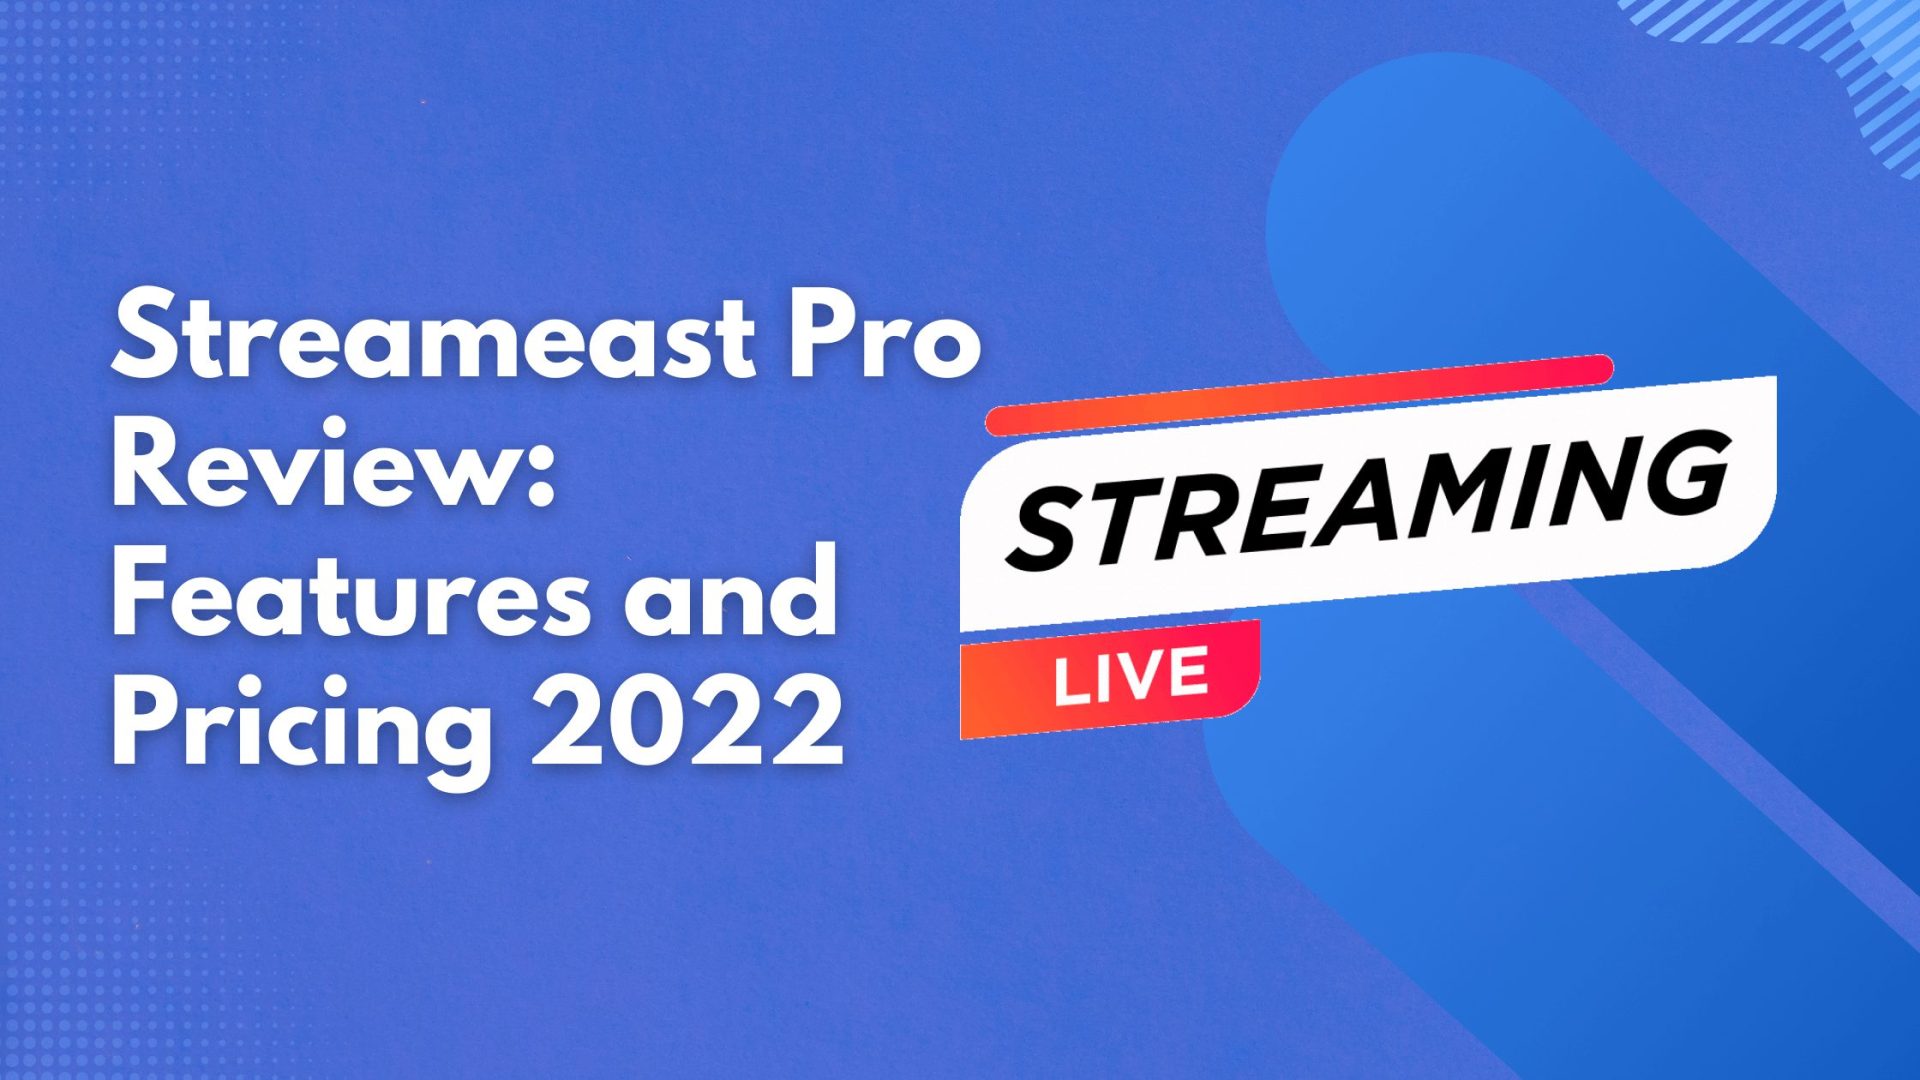 Streameast Pro